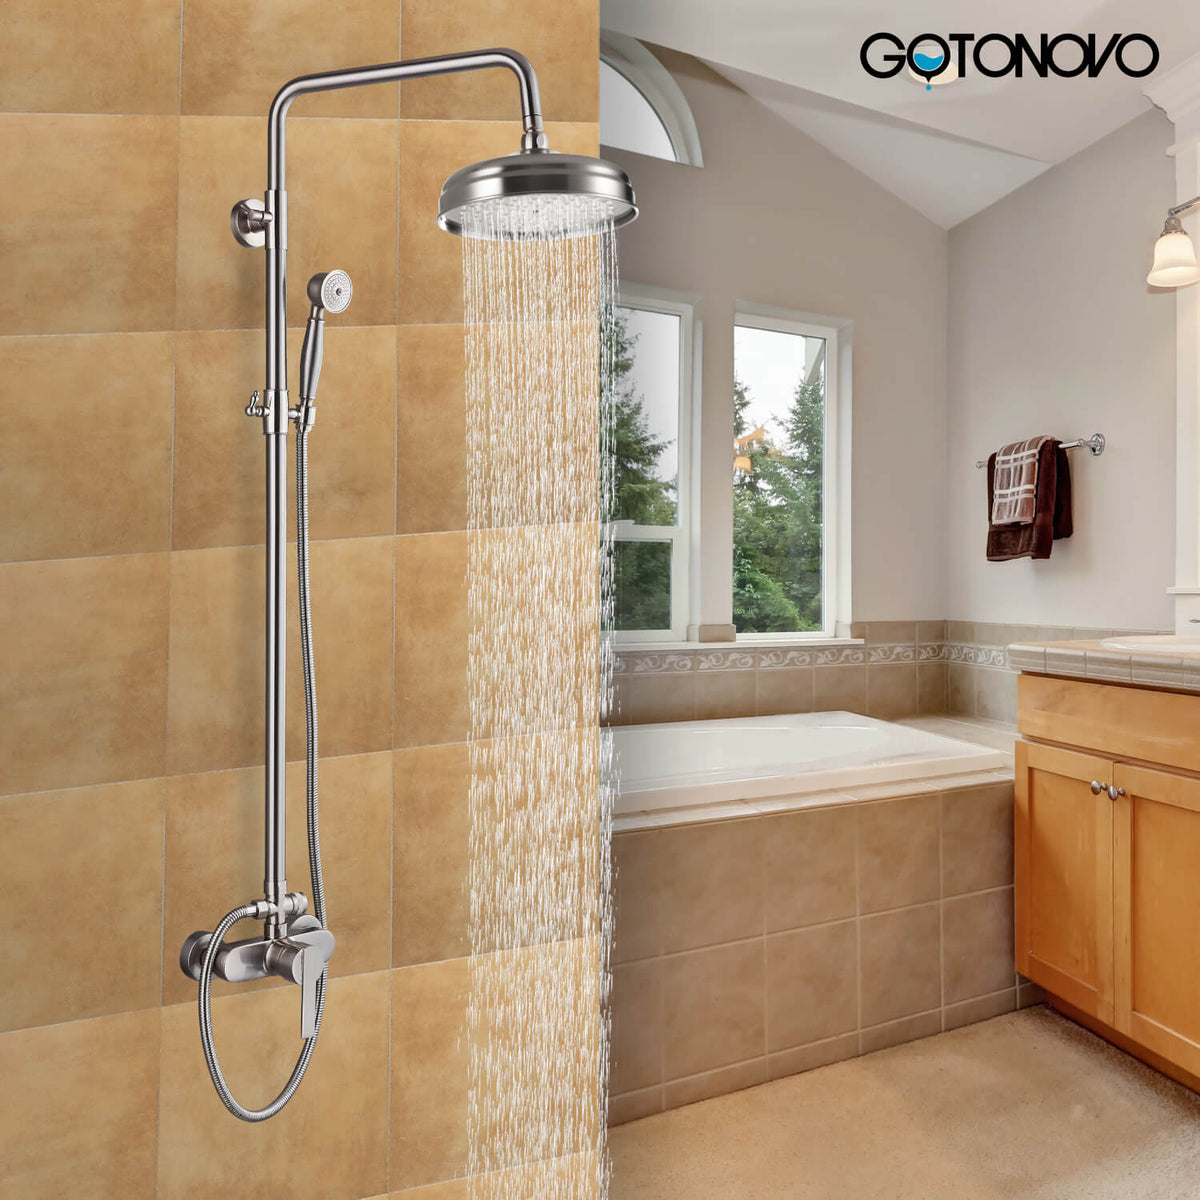 gotonovo Shower Fixture Exposed Pipe Shower System Brass 8 